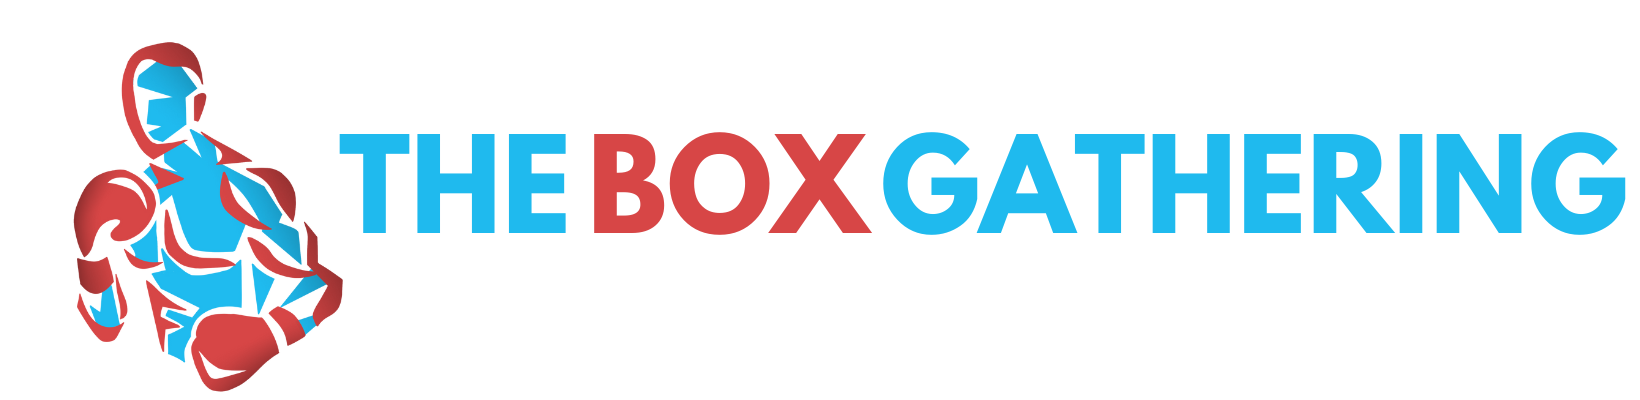 The Box Gathering Header Image